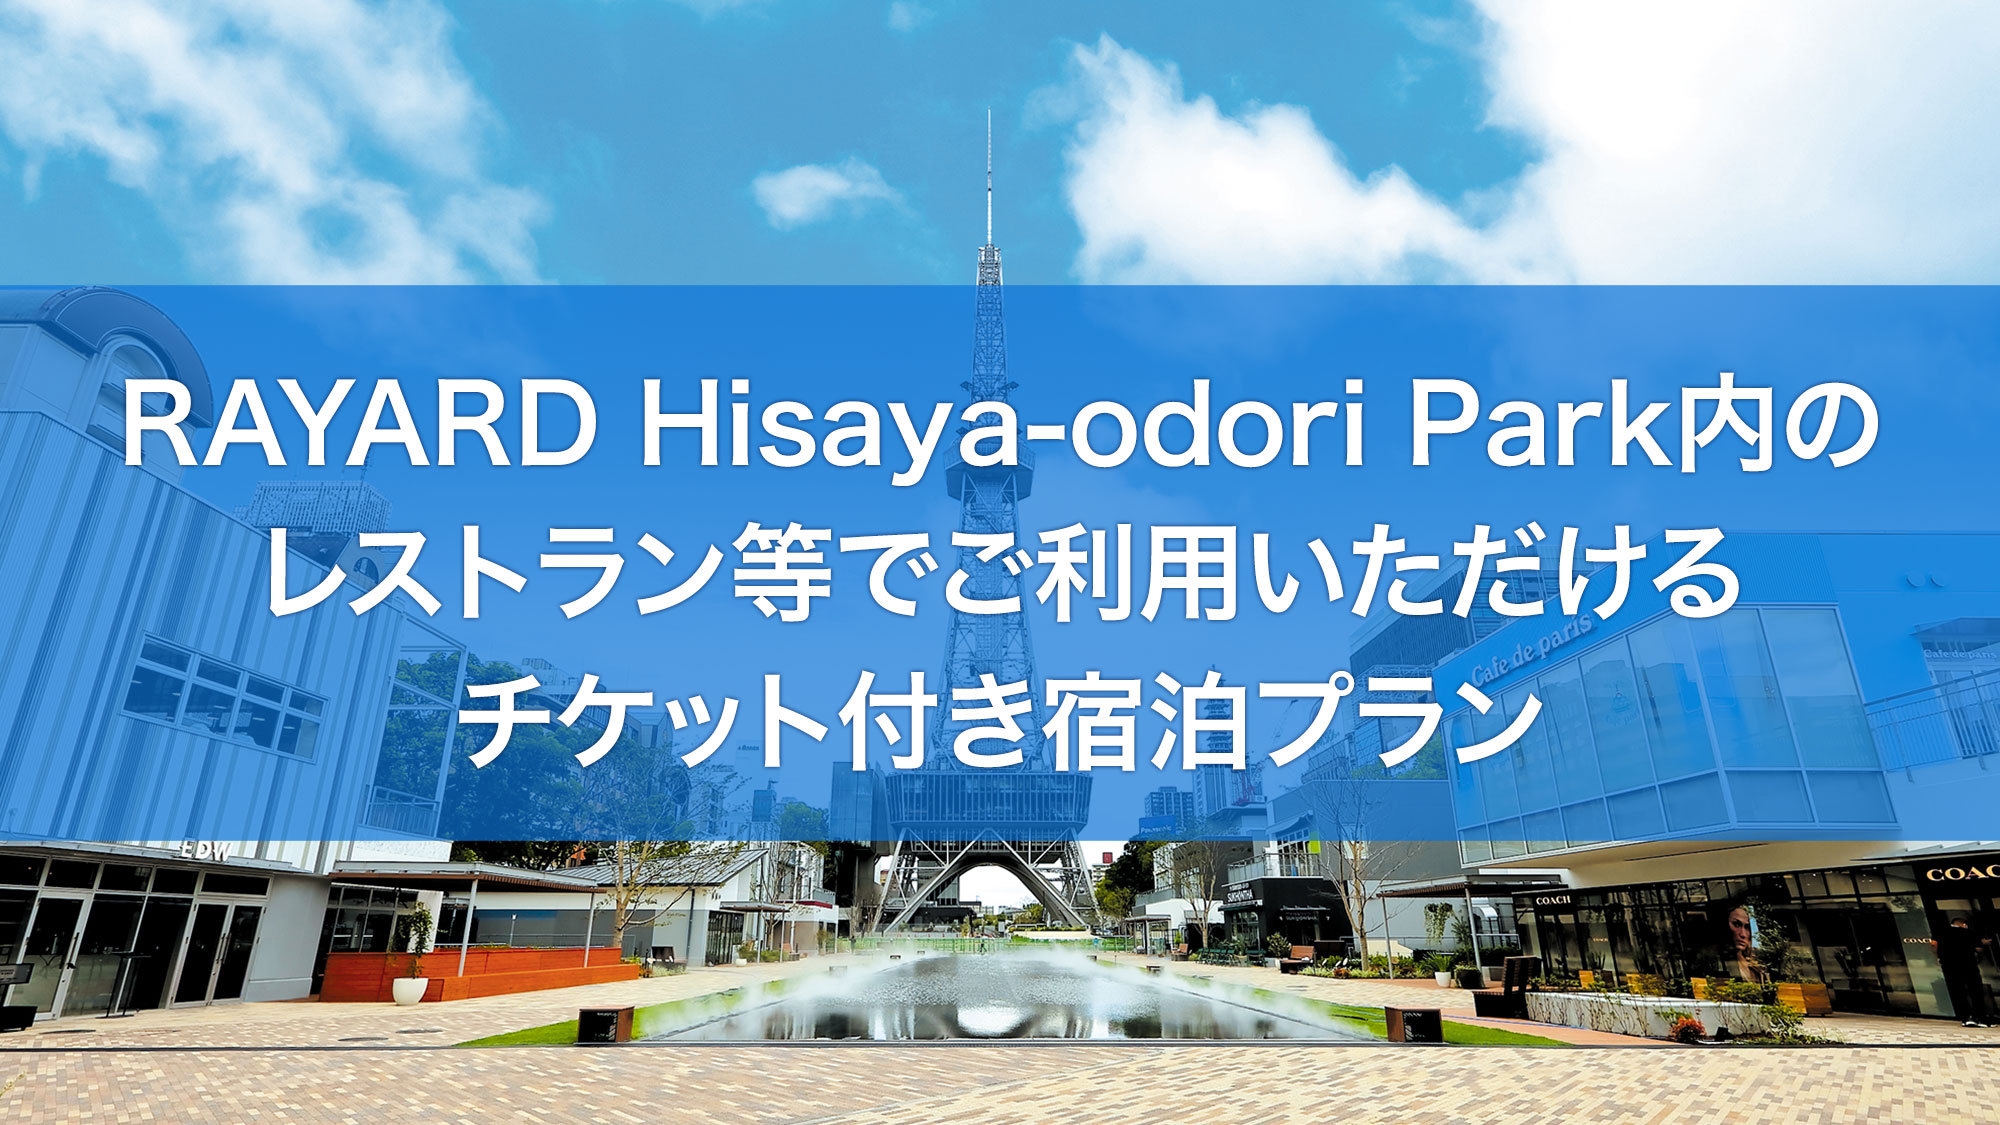 「RAYARD Hisaya-odori Park 飲食店チケット付」宿泊プラン ＜朝食付＞